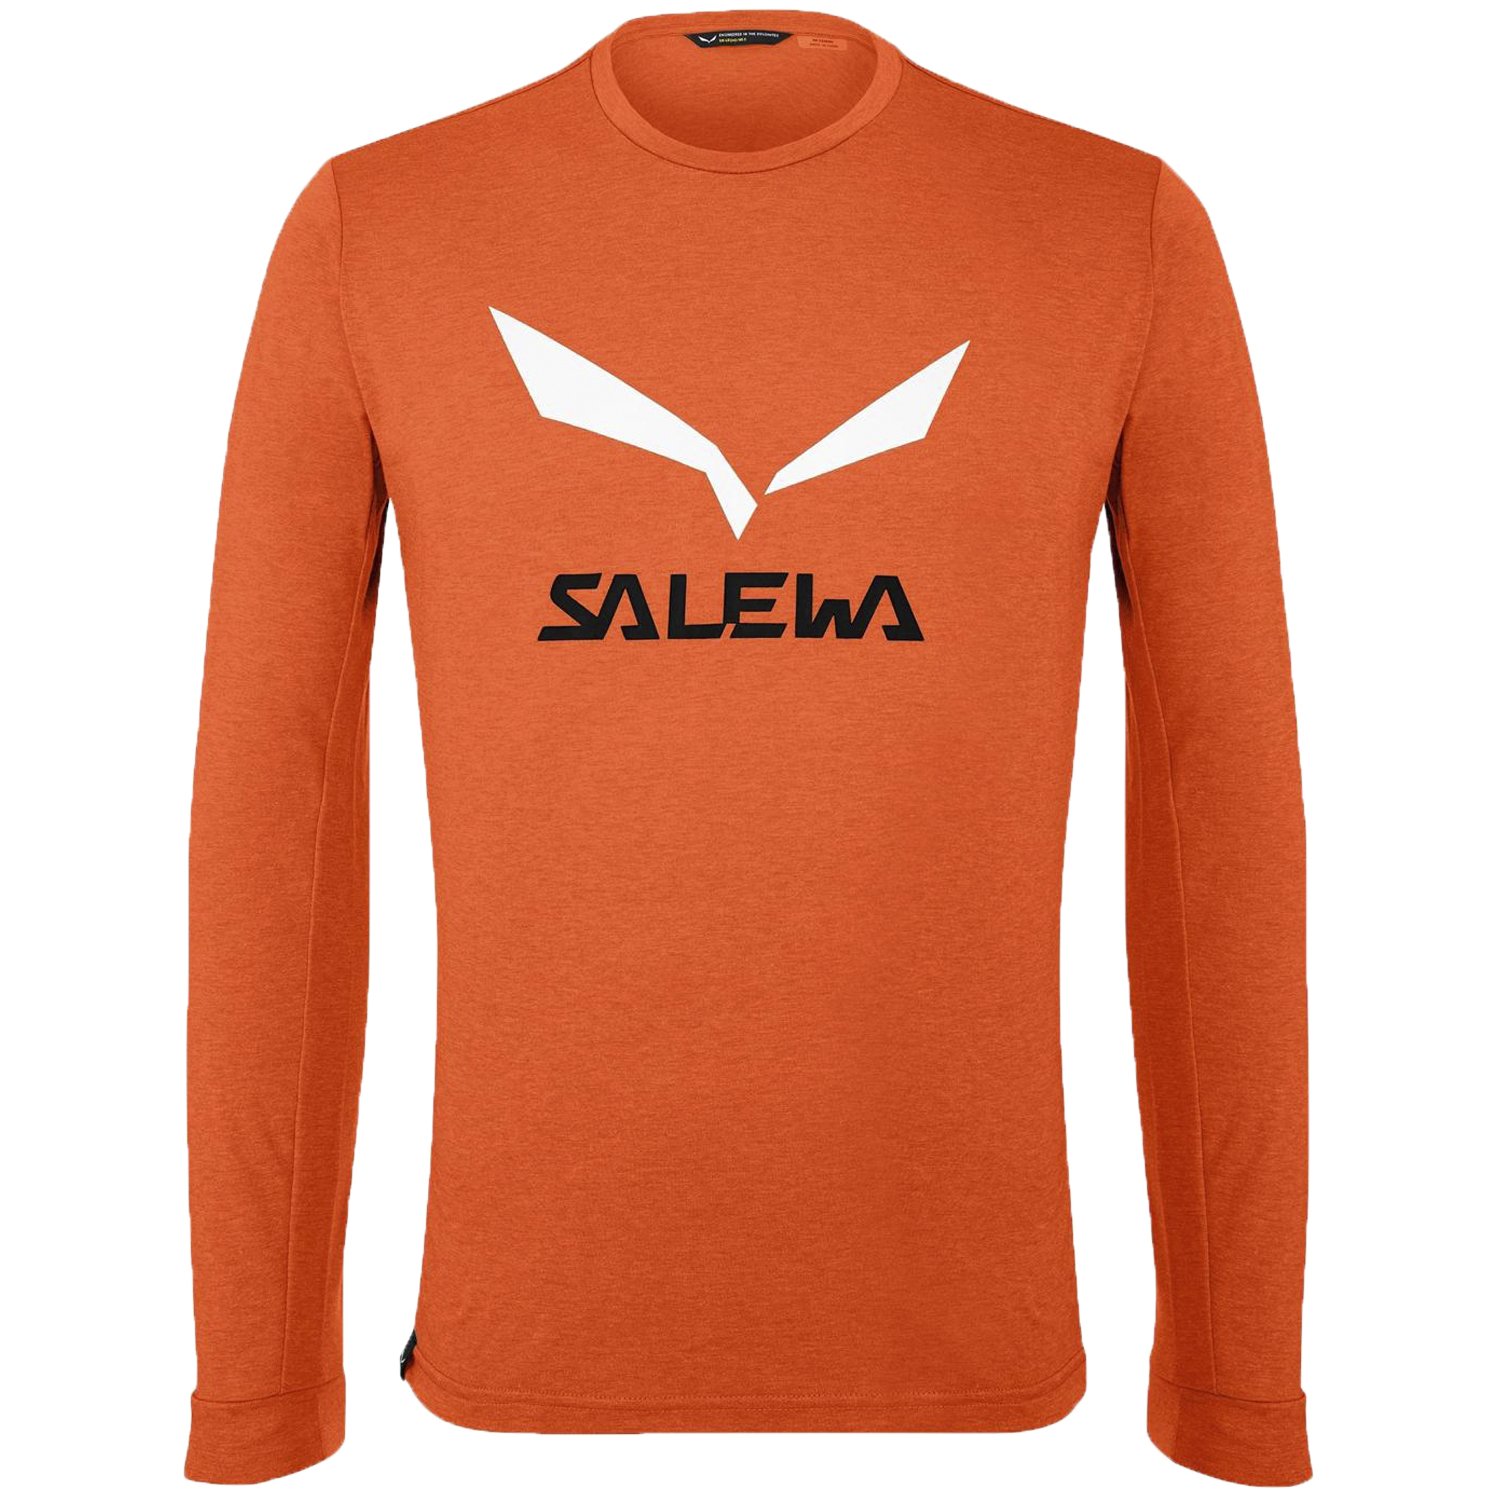 Футболка Salewa Solidlogo Dry Men's L/S Tee Red Orange Melange, с длинным рукавом, мужская, 00-0000027340_4156 mjolk футболка с длинным рукавом mushrooms